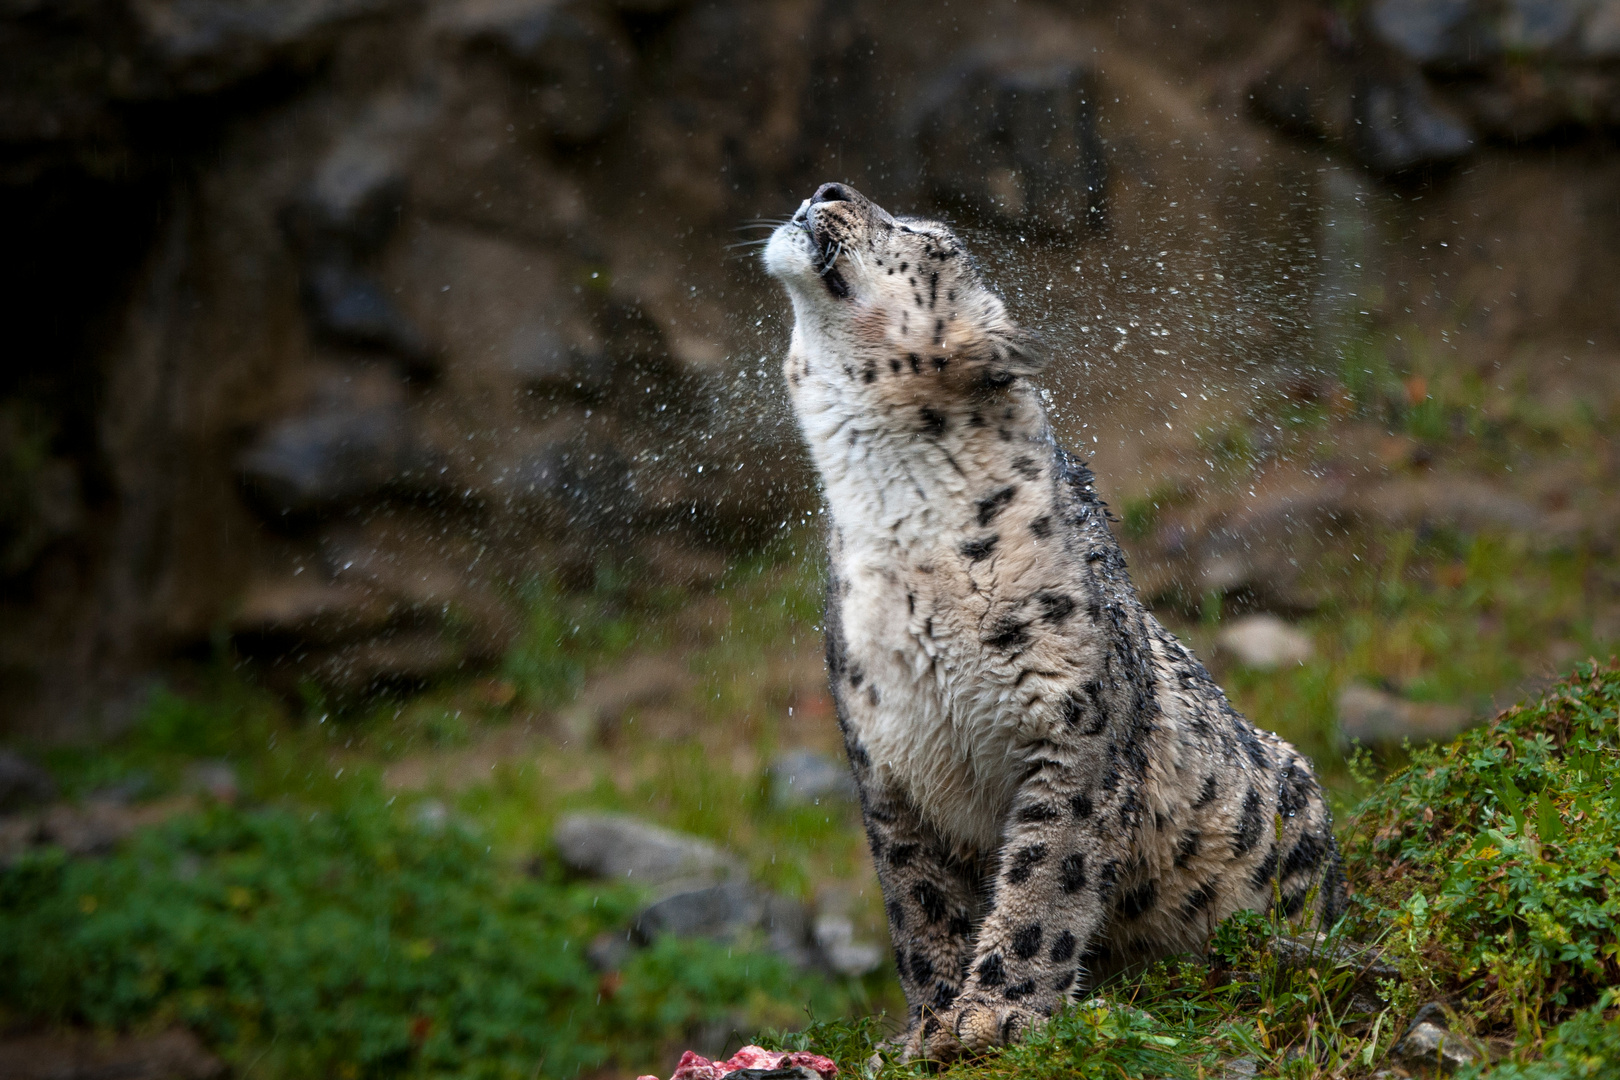 Ausschütteln: Durchnässter Schneeleopard Villy, Zoo Zürich